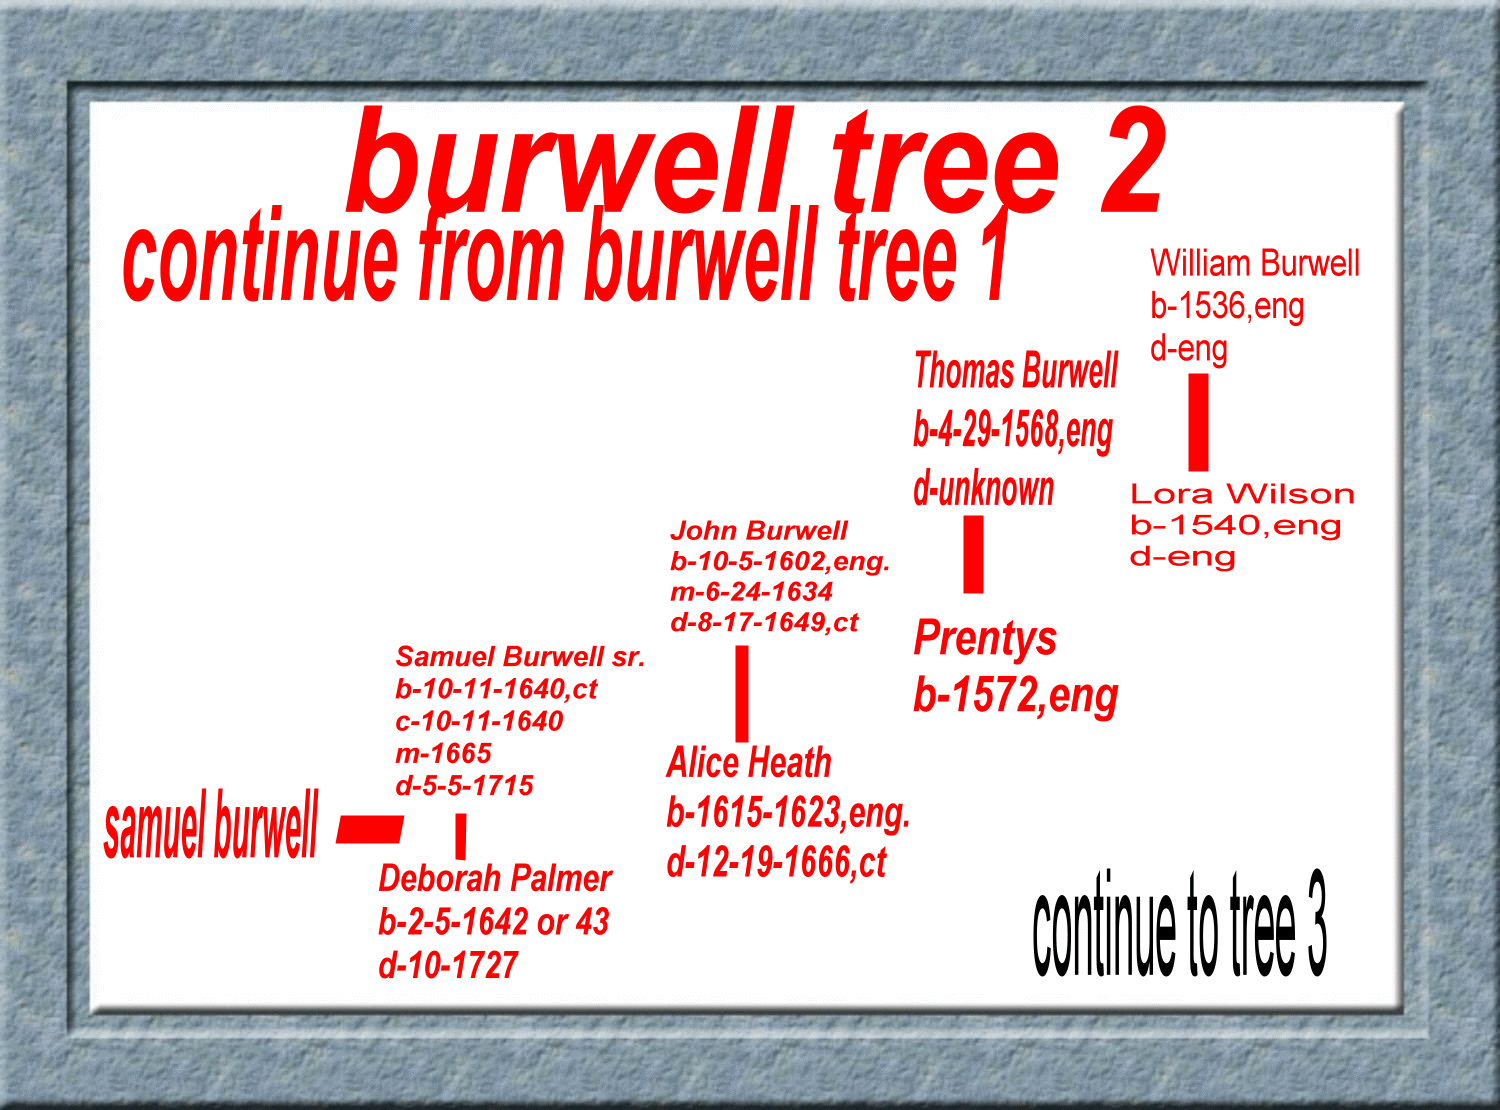 burwelltree2.gif